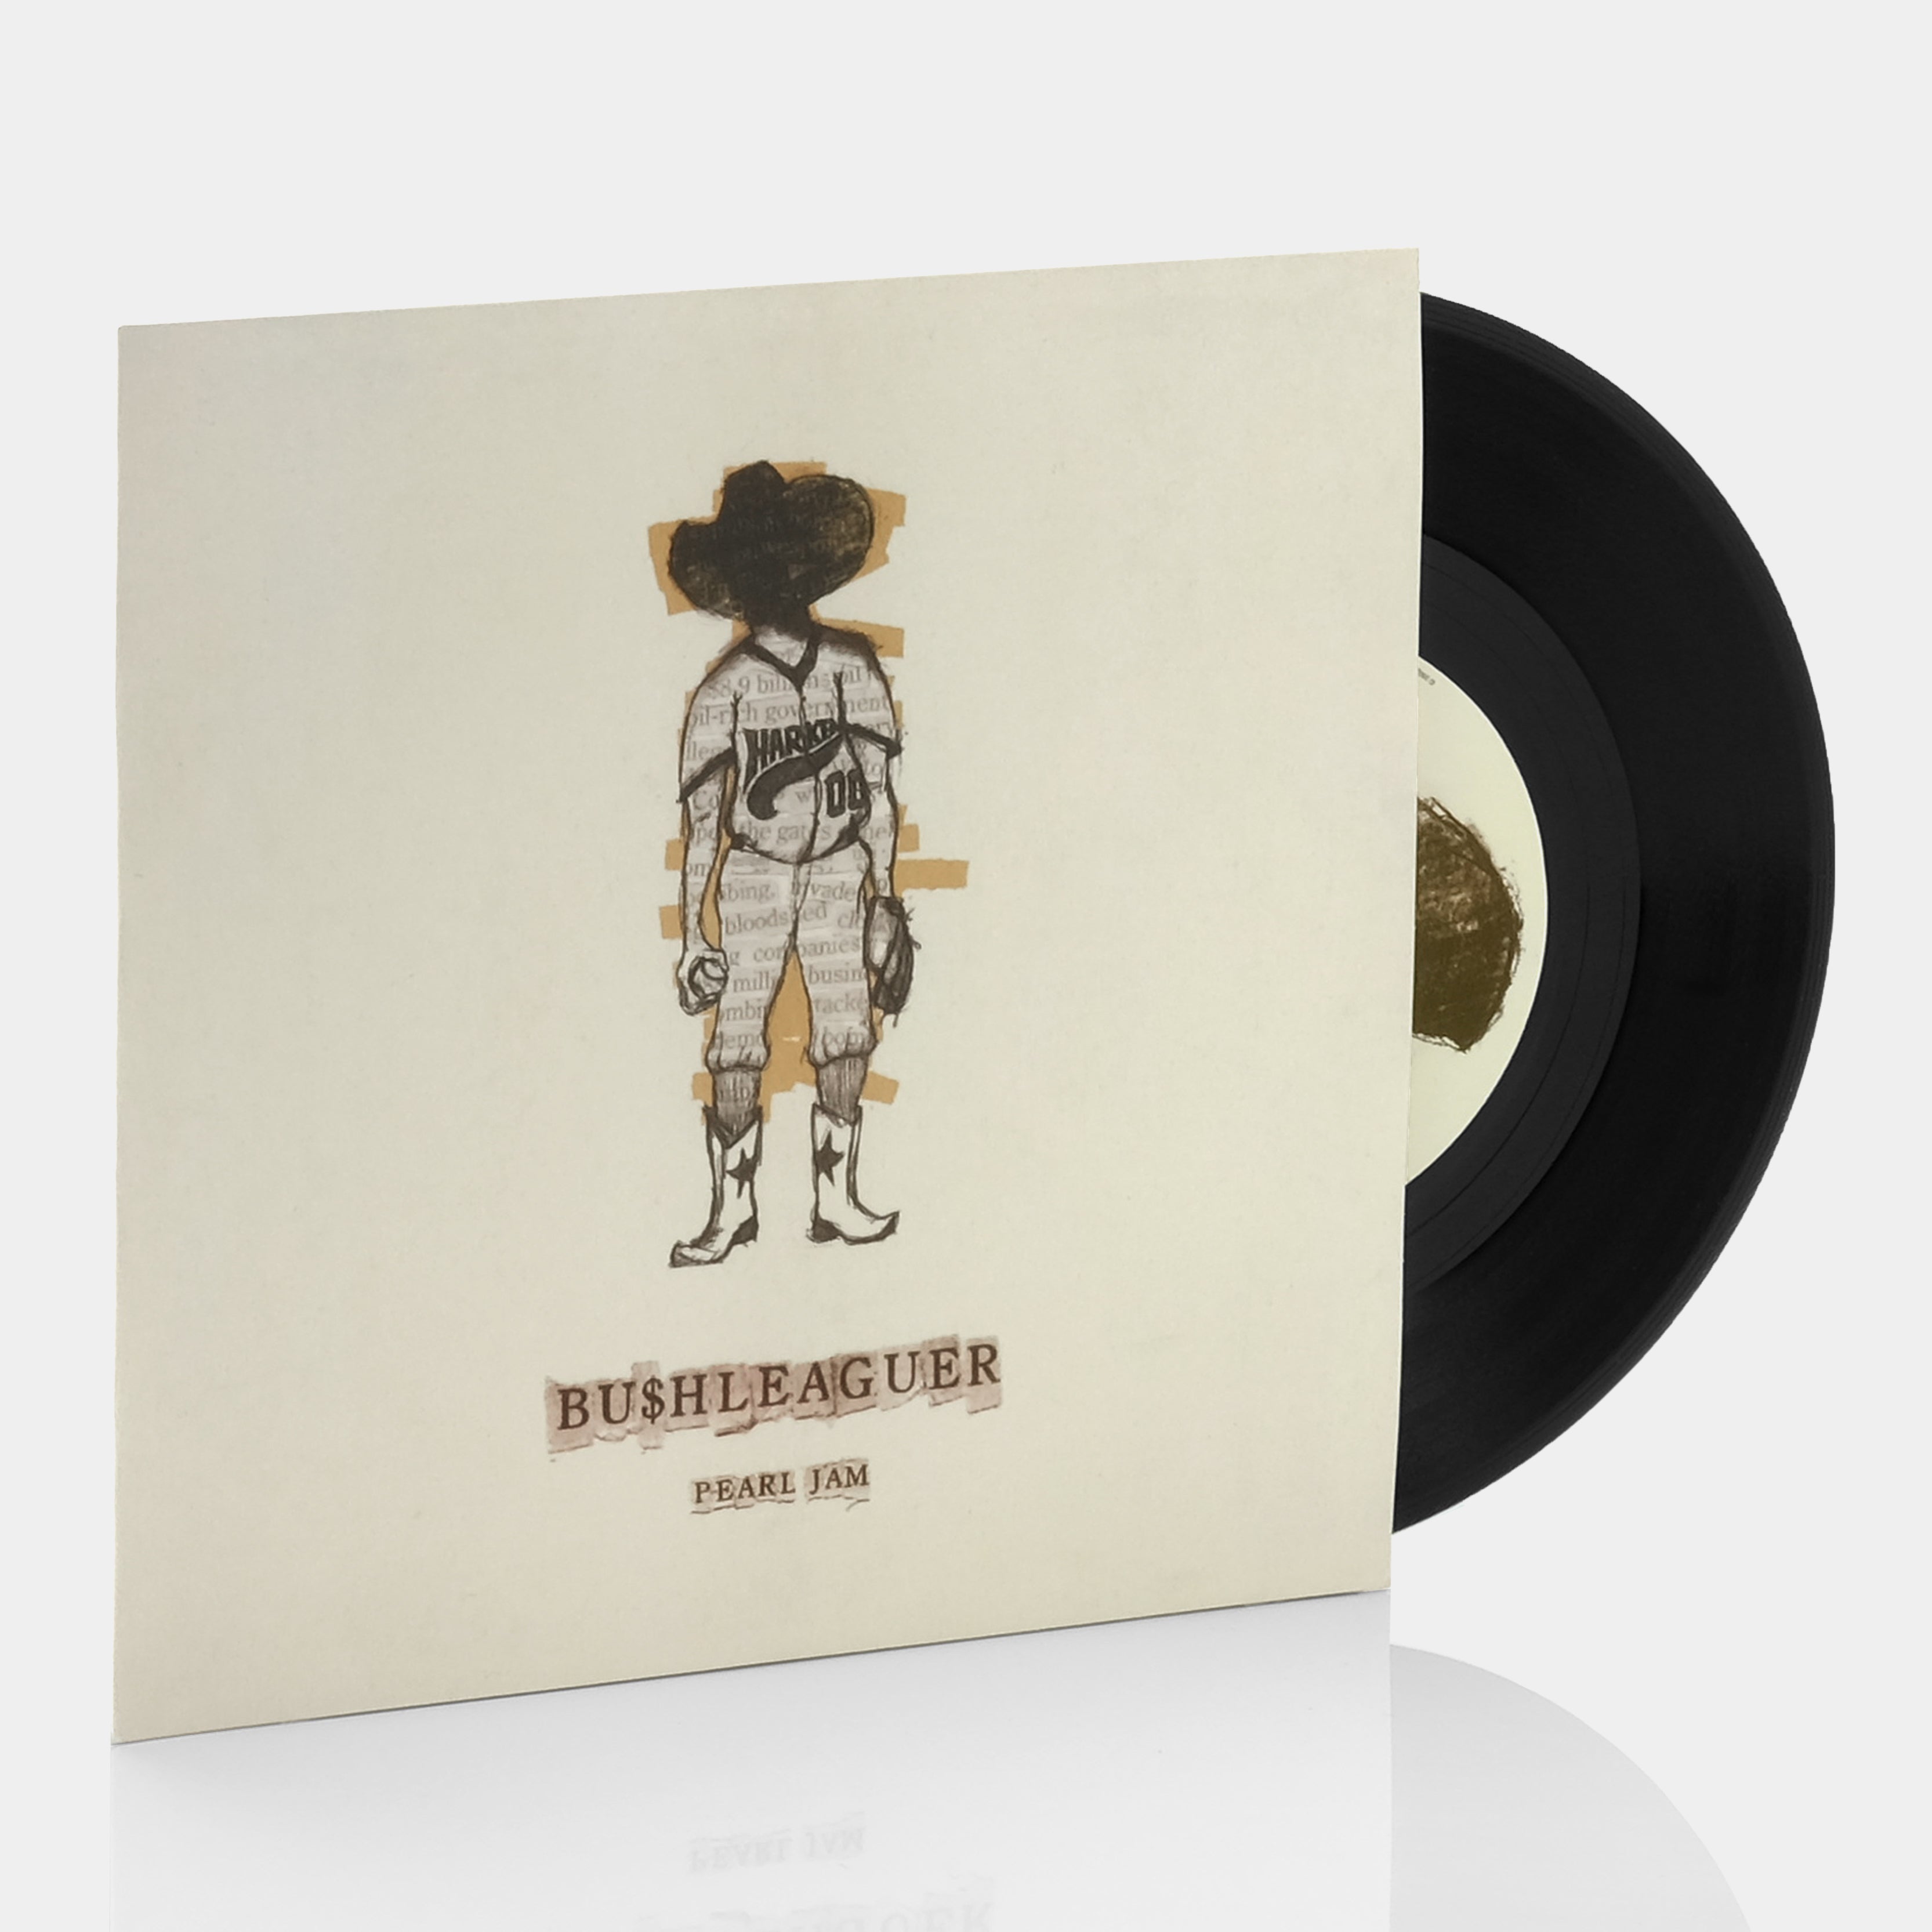 Pearl Jam - Bu$hleaguer 7" Single Vinyl Record